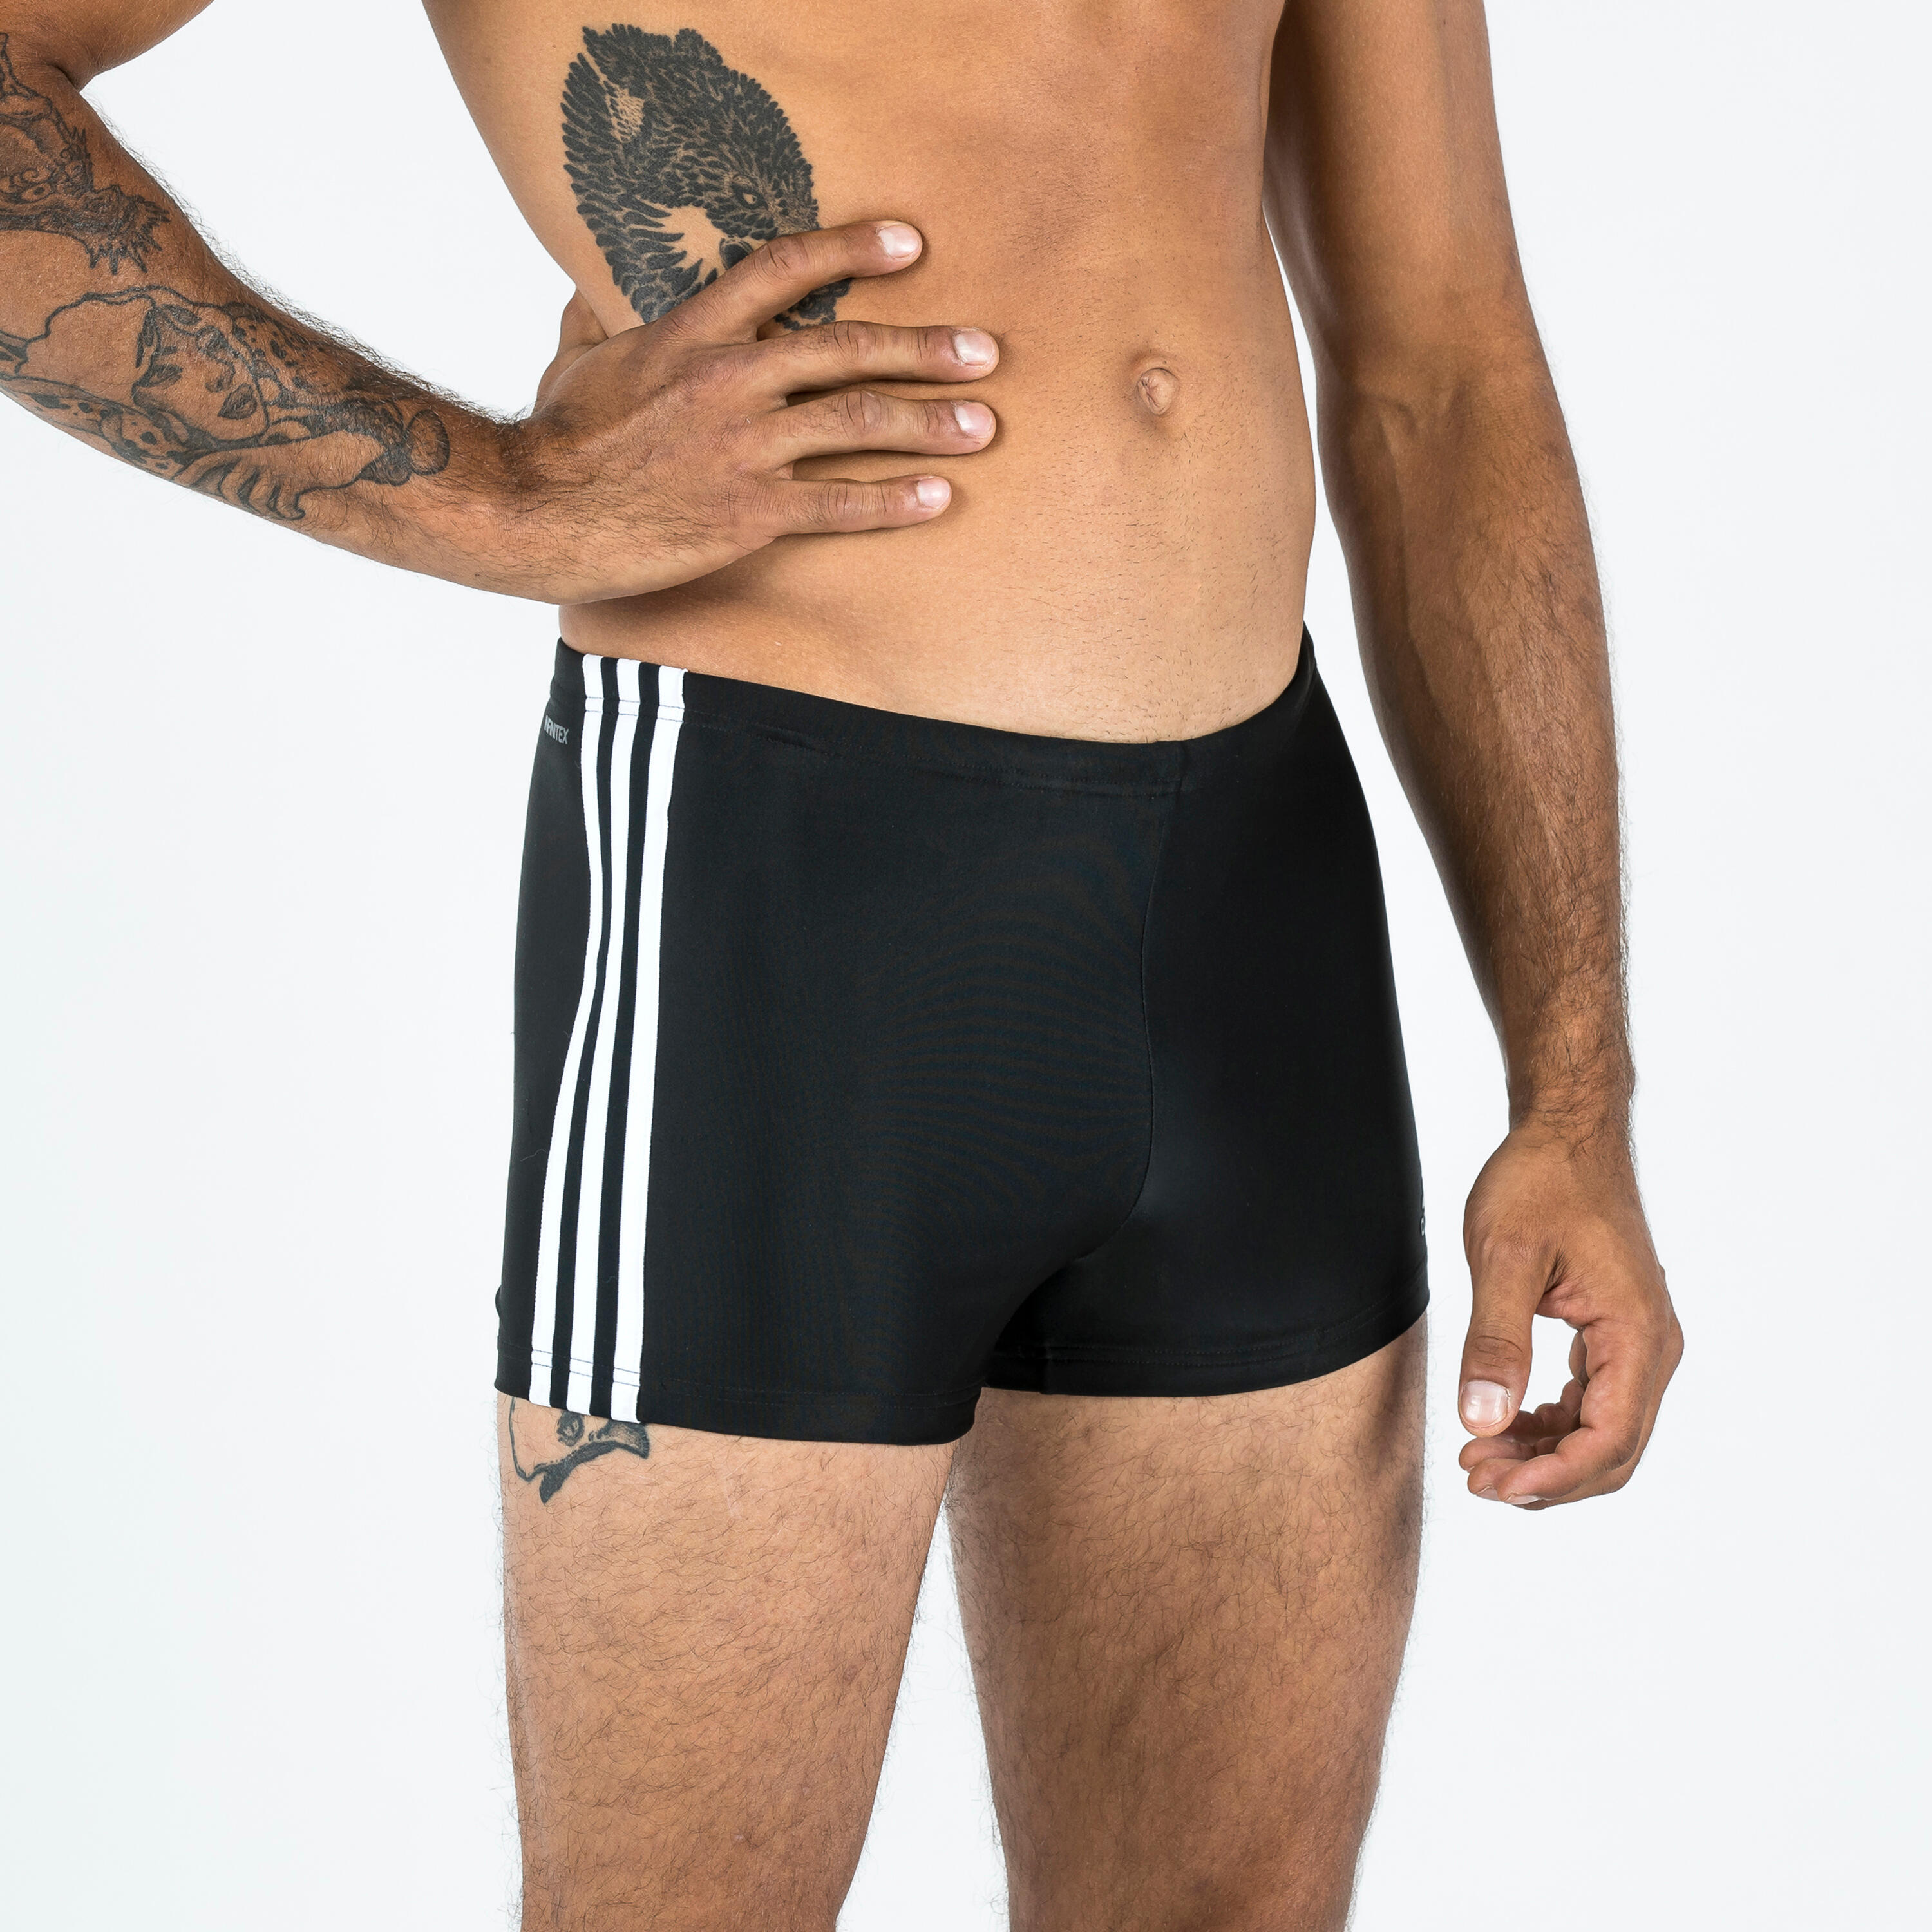 Men's swimming boxer swimsuit ADIDAS 3S black white 1/5